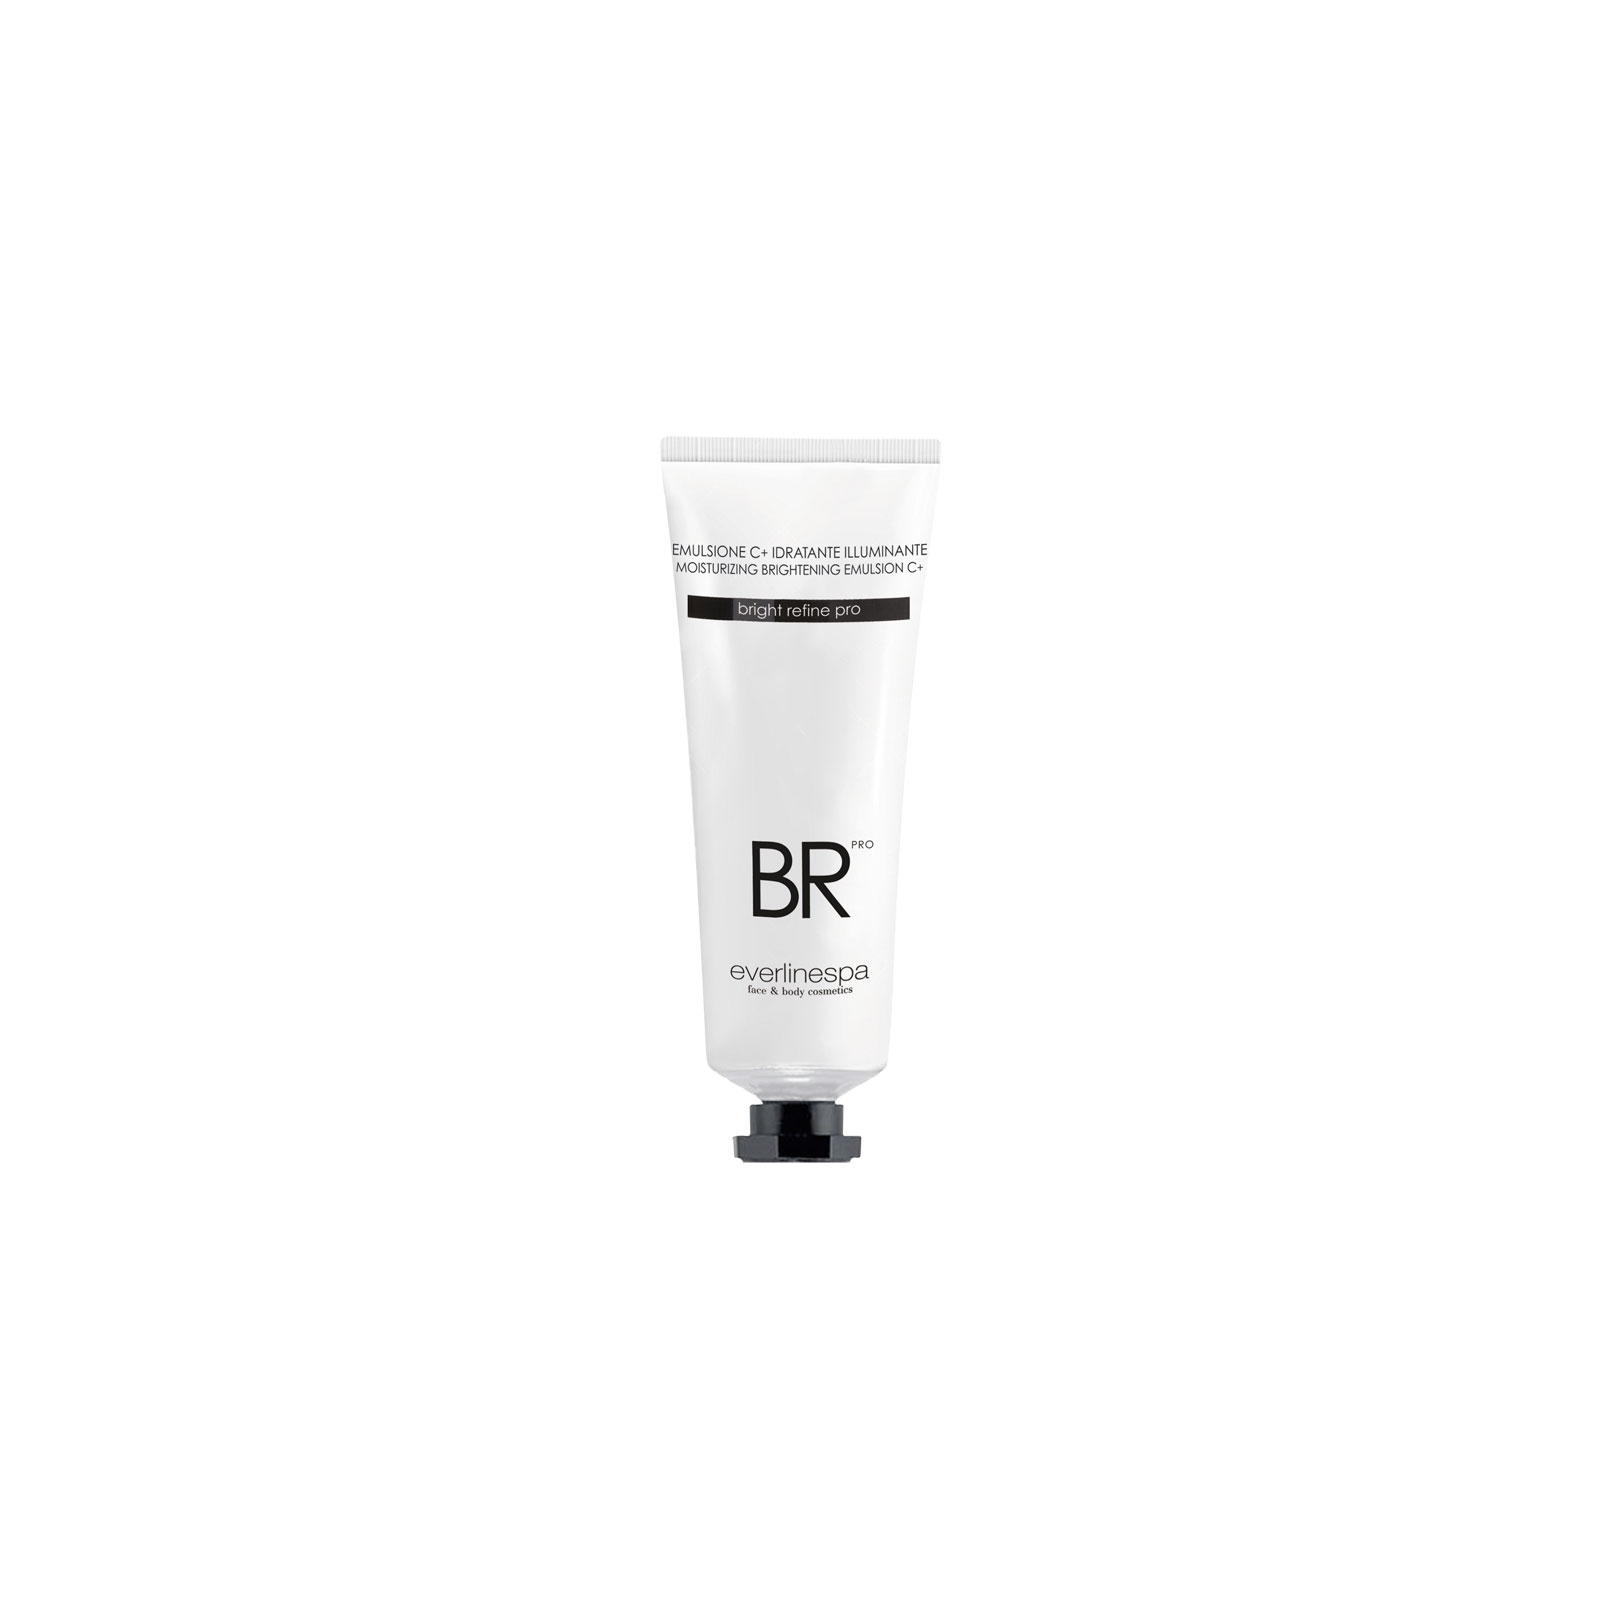 BR_emulsione-hydratant illuminante- 50 ml.jpg